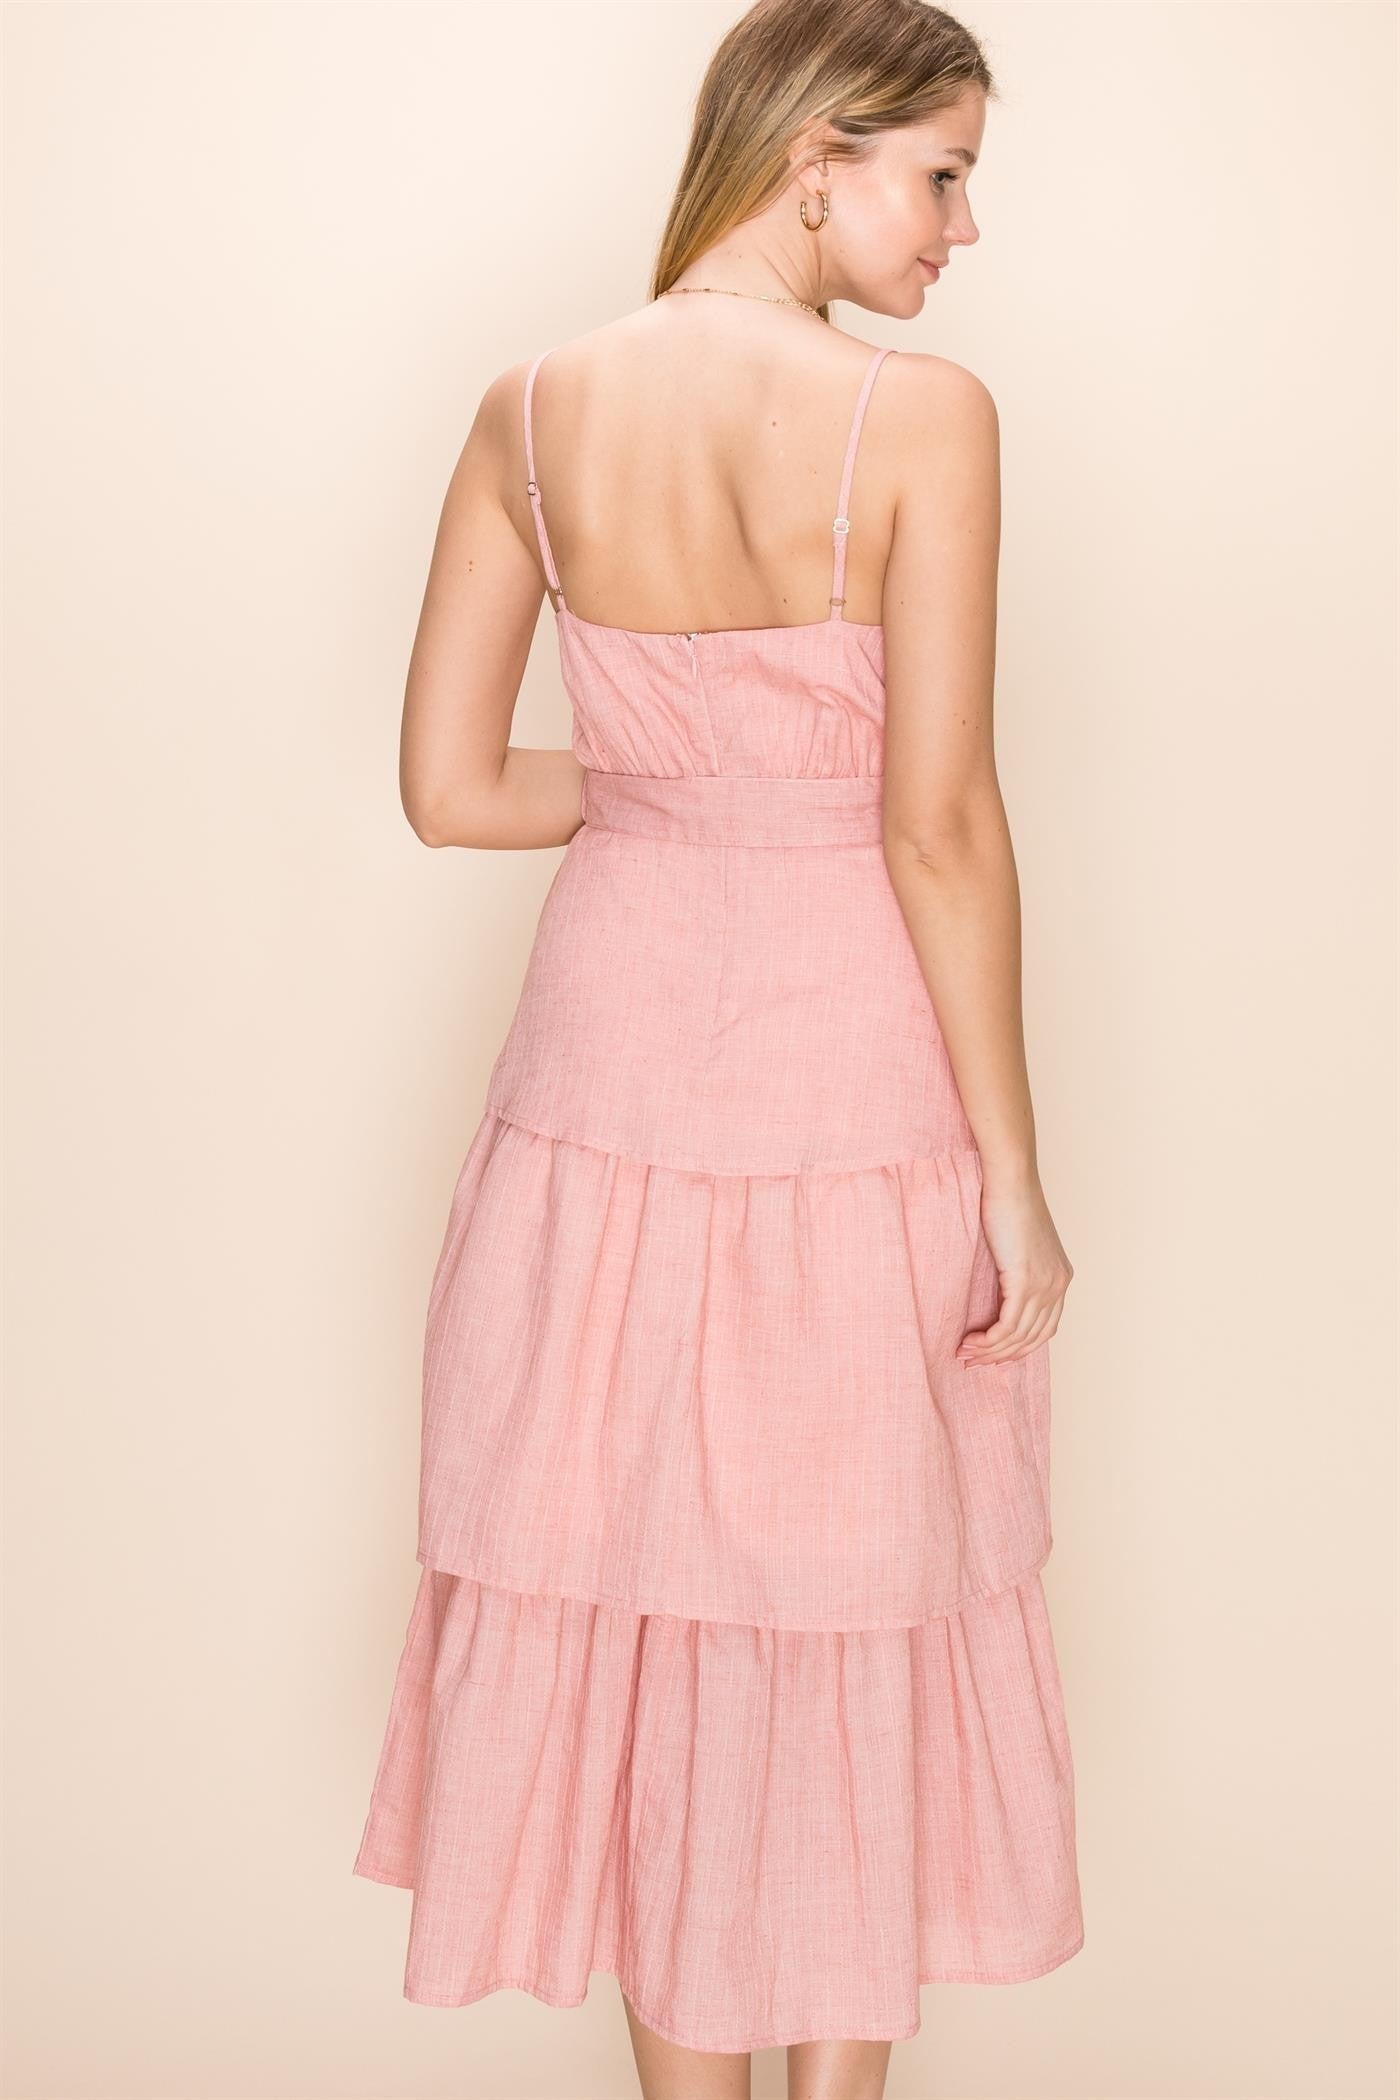 Pink bowed dress